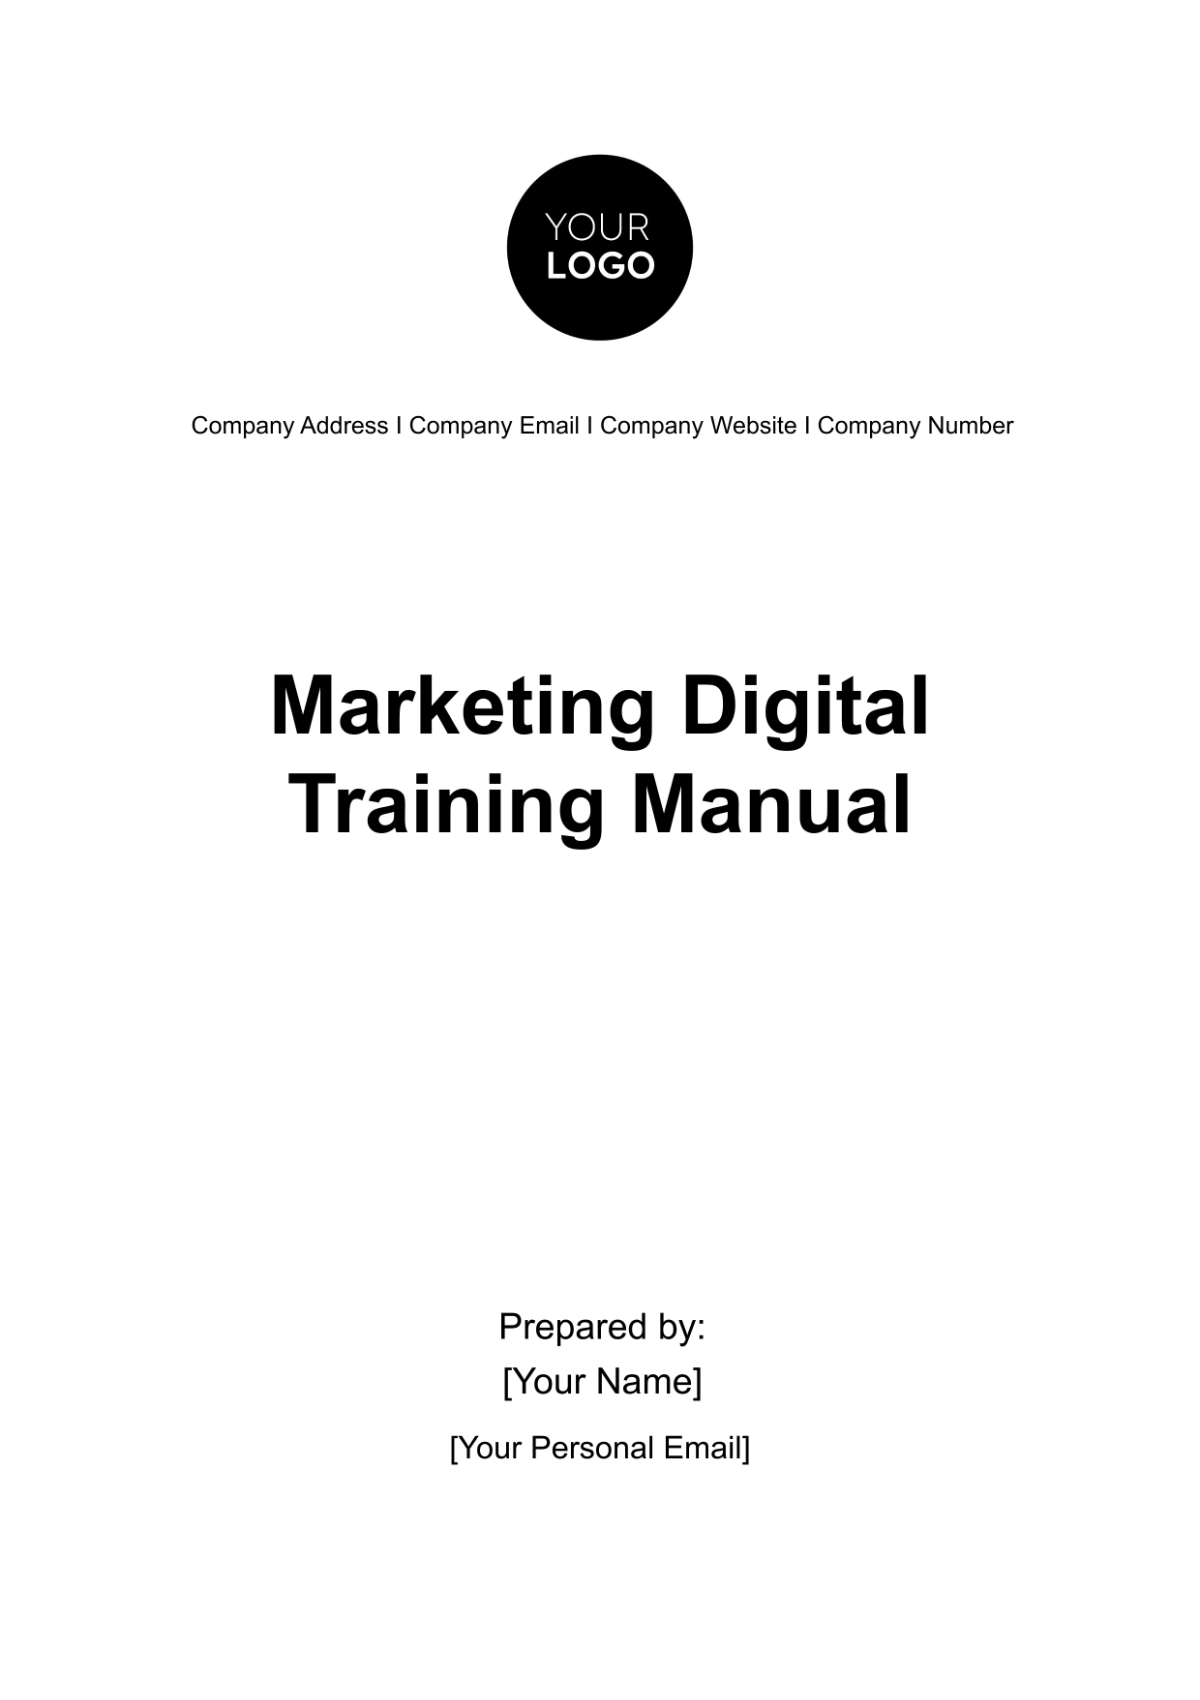 Marketing Digital Training Manual Template